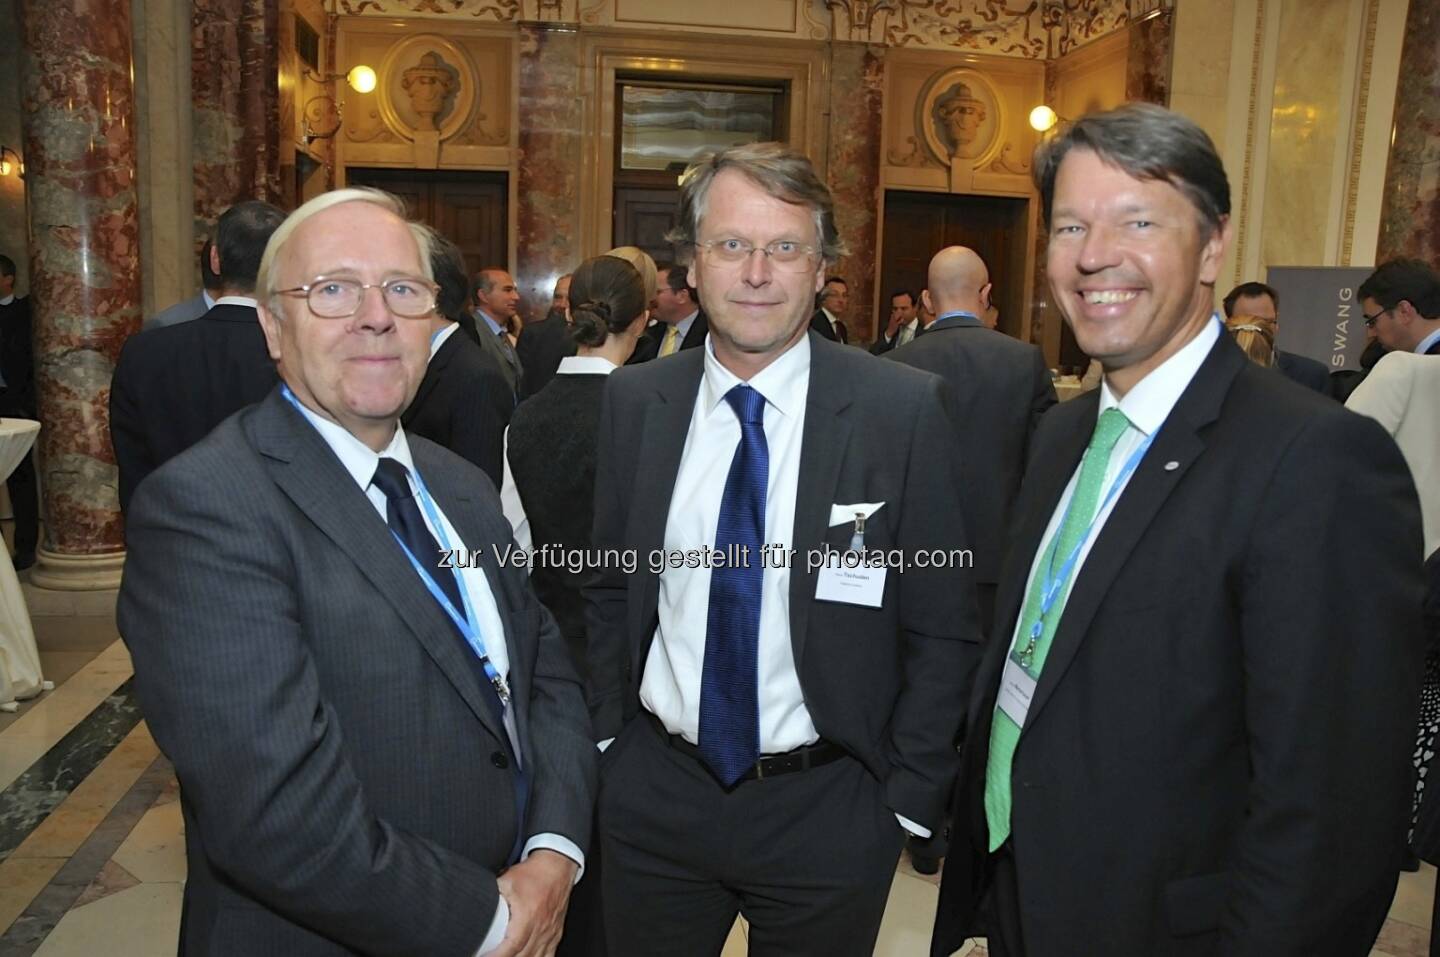  Hans Tschuden (Telekom Austria), Gerhard Marterbauer (Deloitte, rechts)